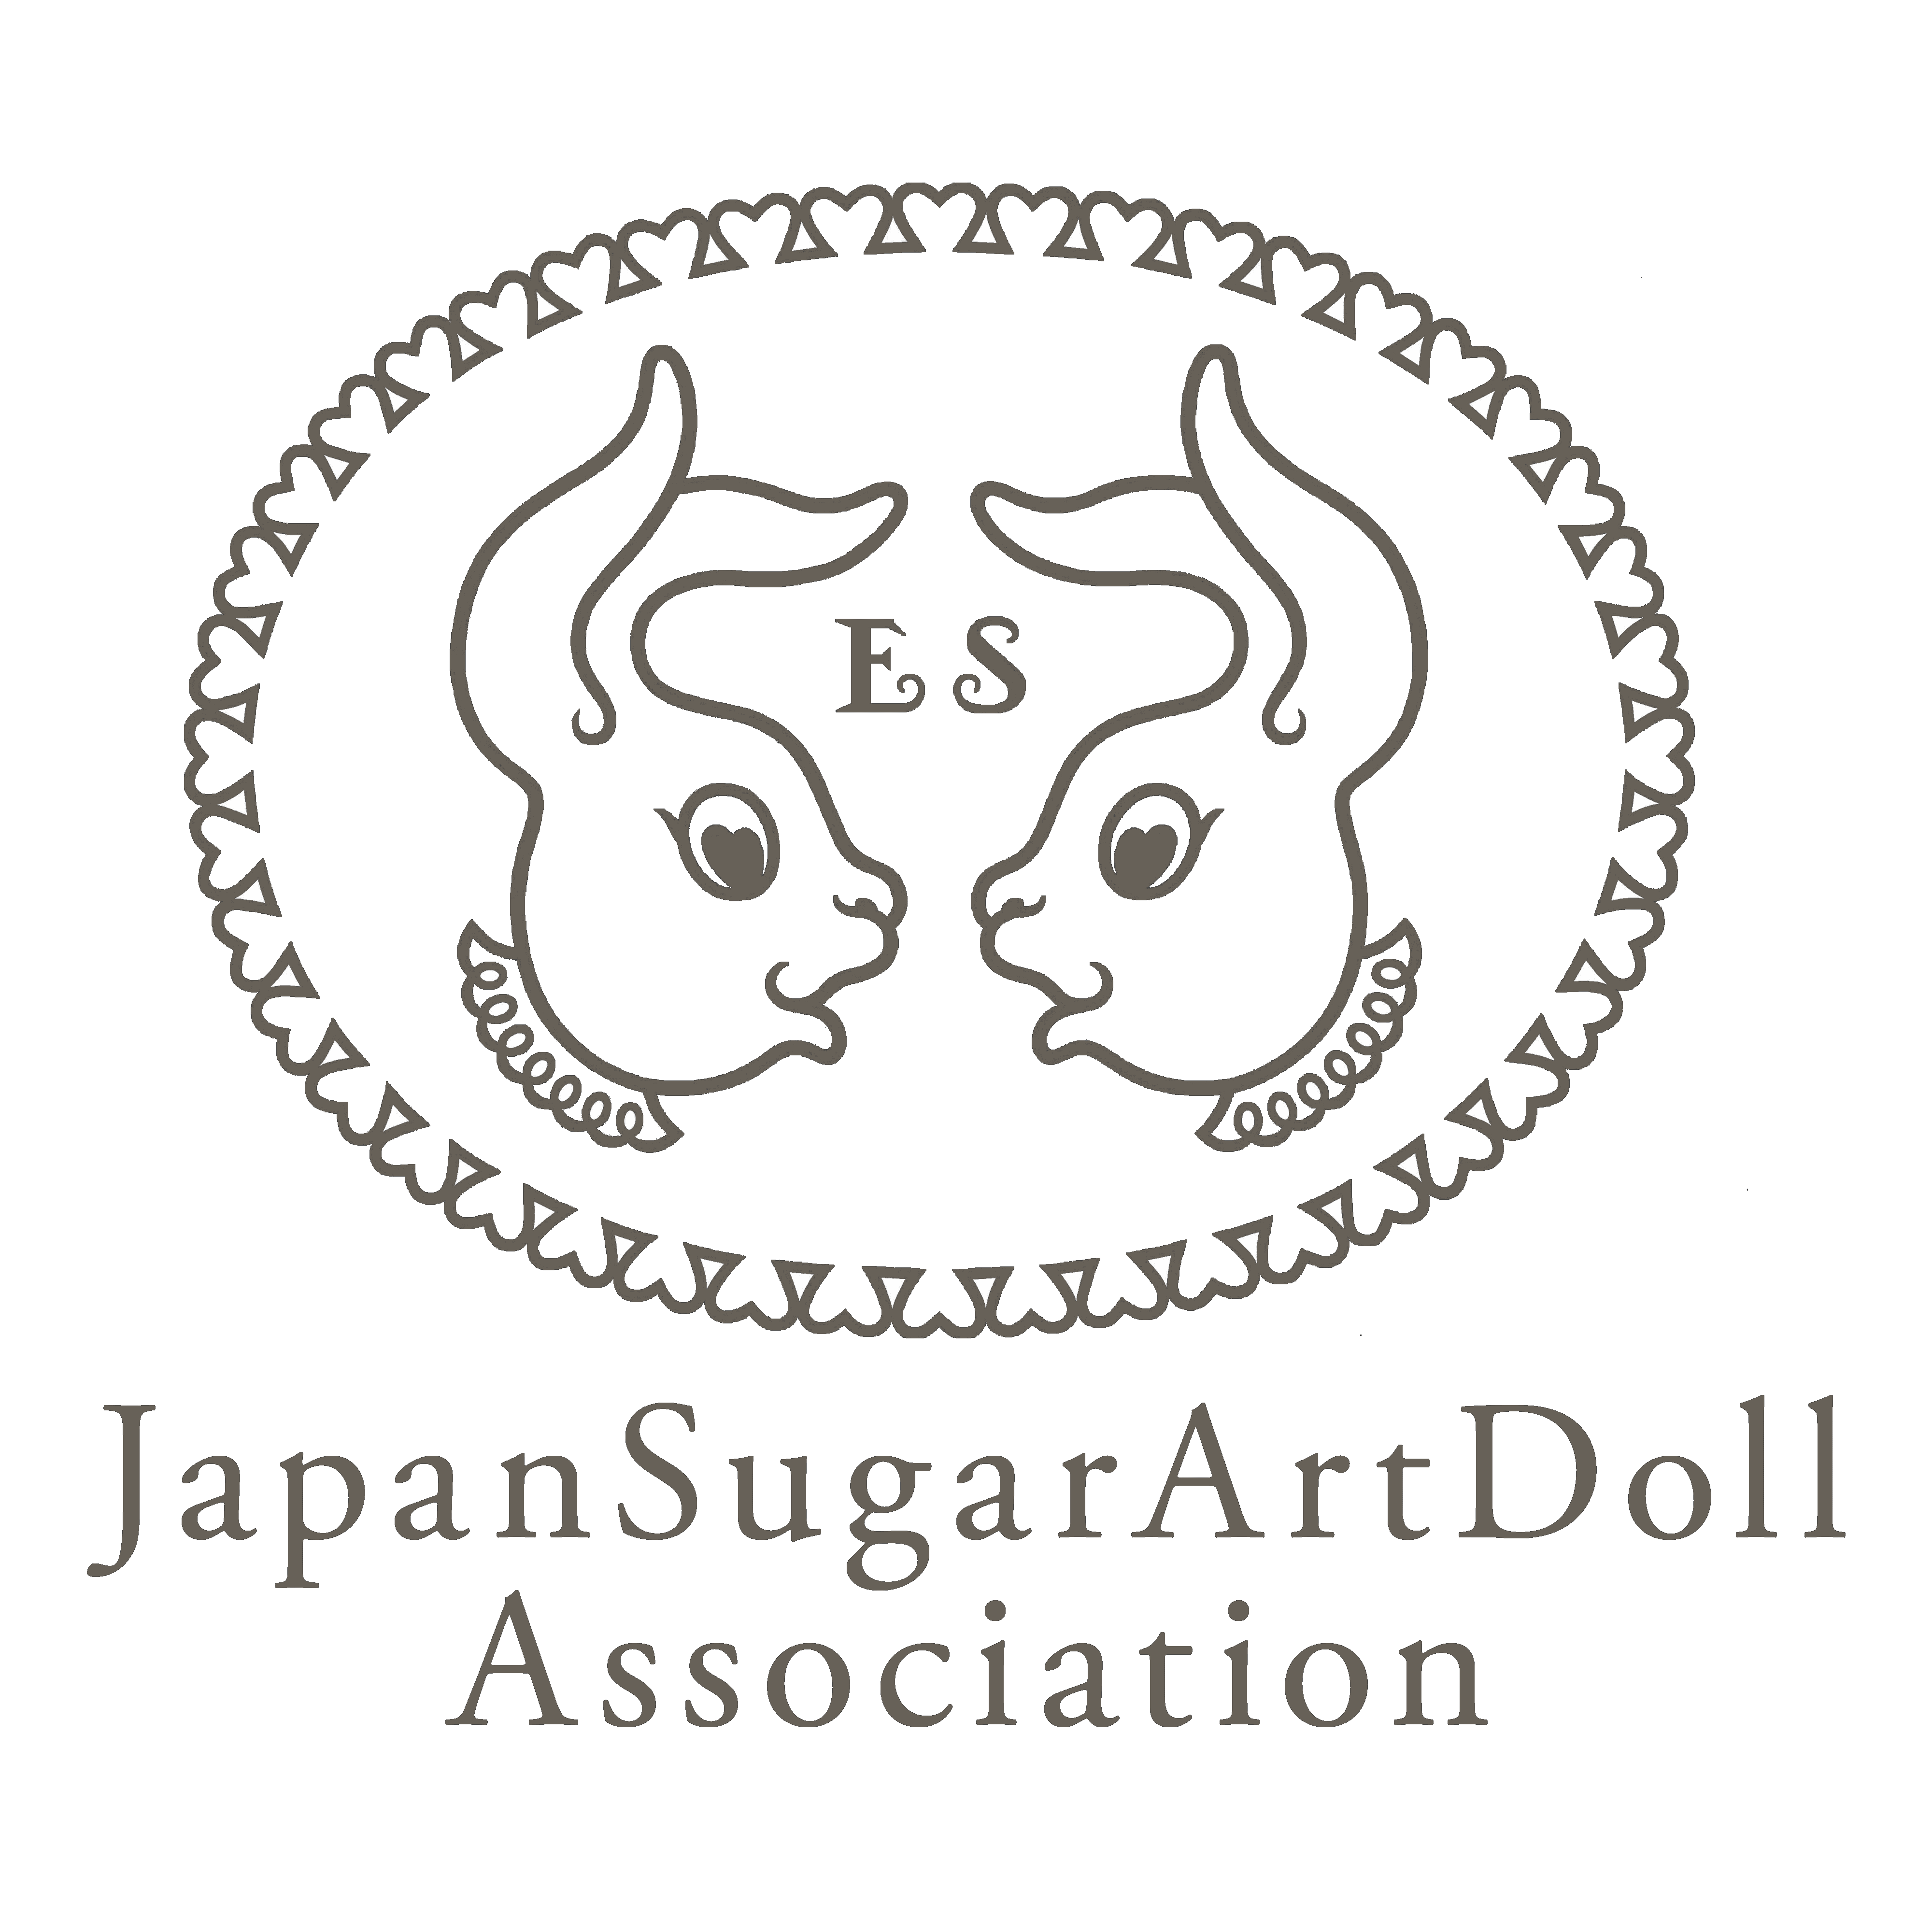 Jpan Sugar Art oll Association